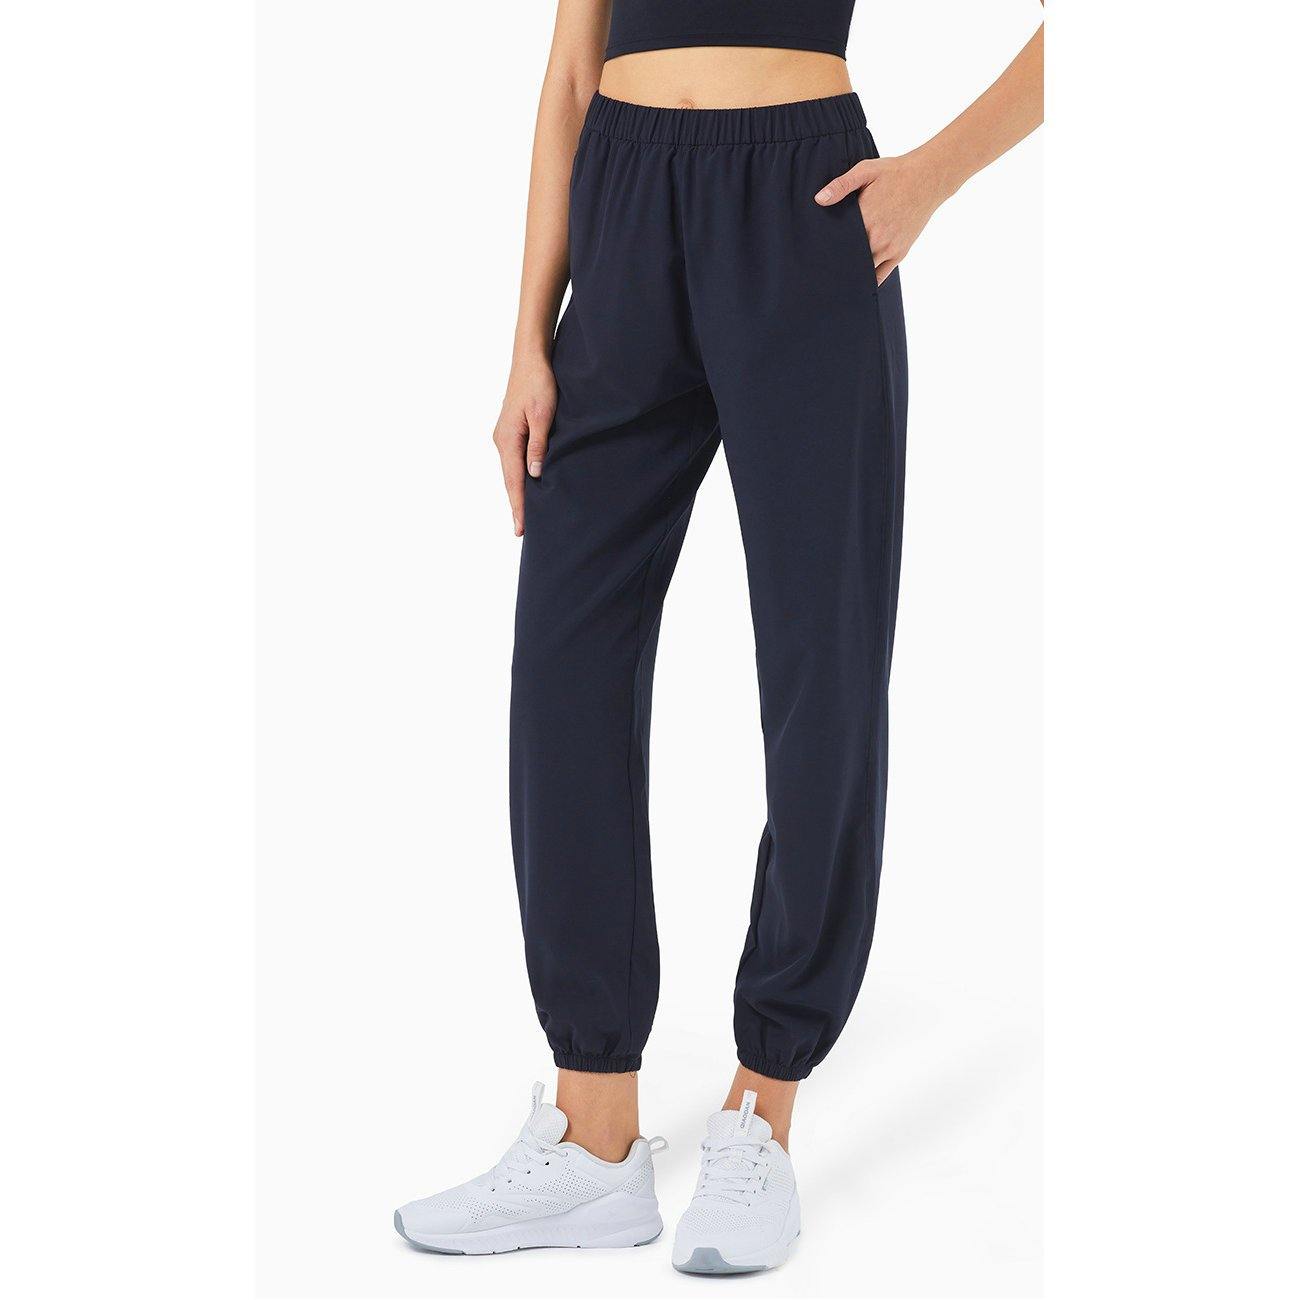 Quick Dry Causal Sweat Pants sportfit workout activewear yoga wear wholesale manufacturer